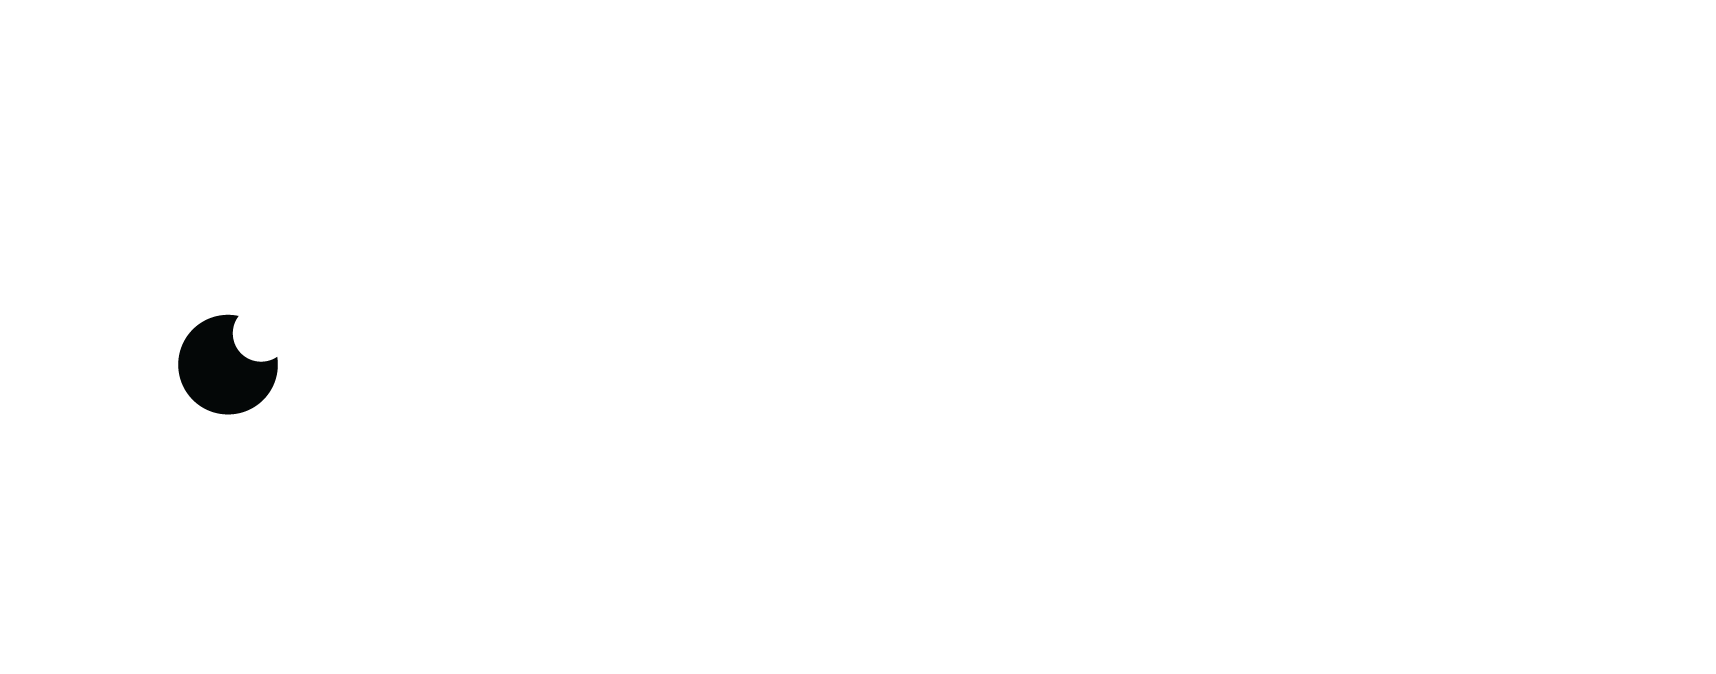 Carolina Cataract & Laser